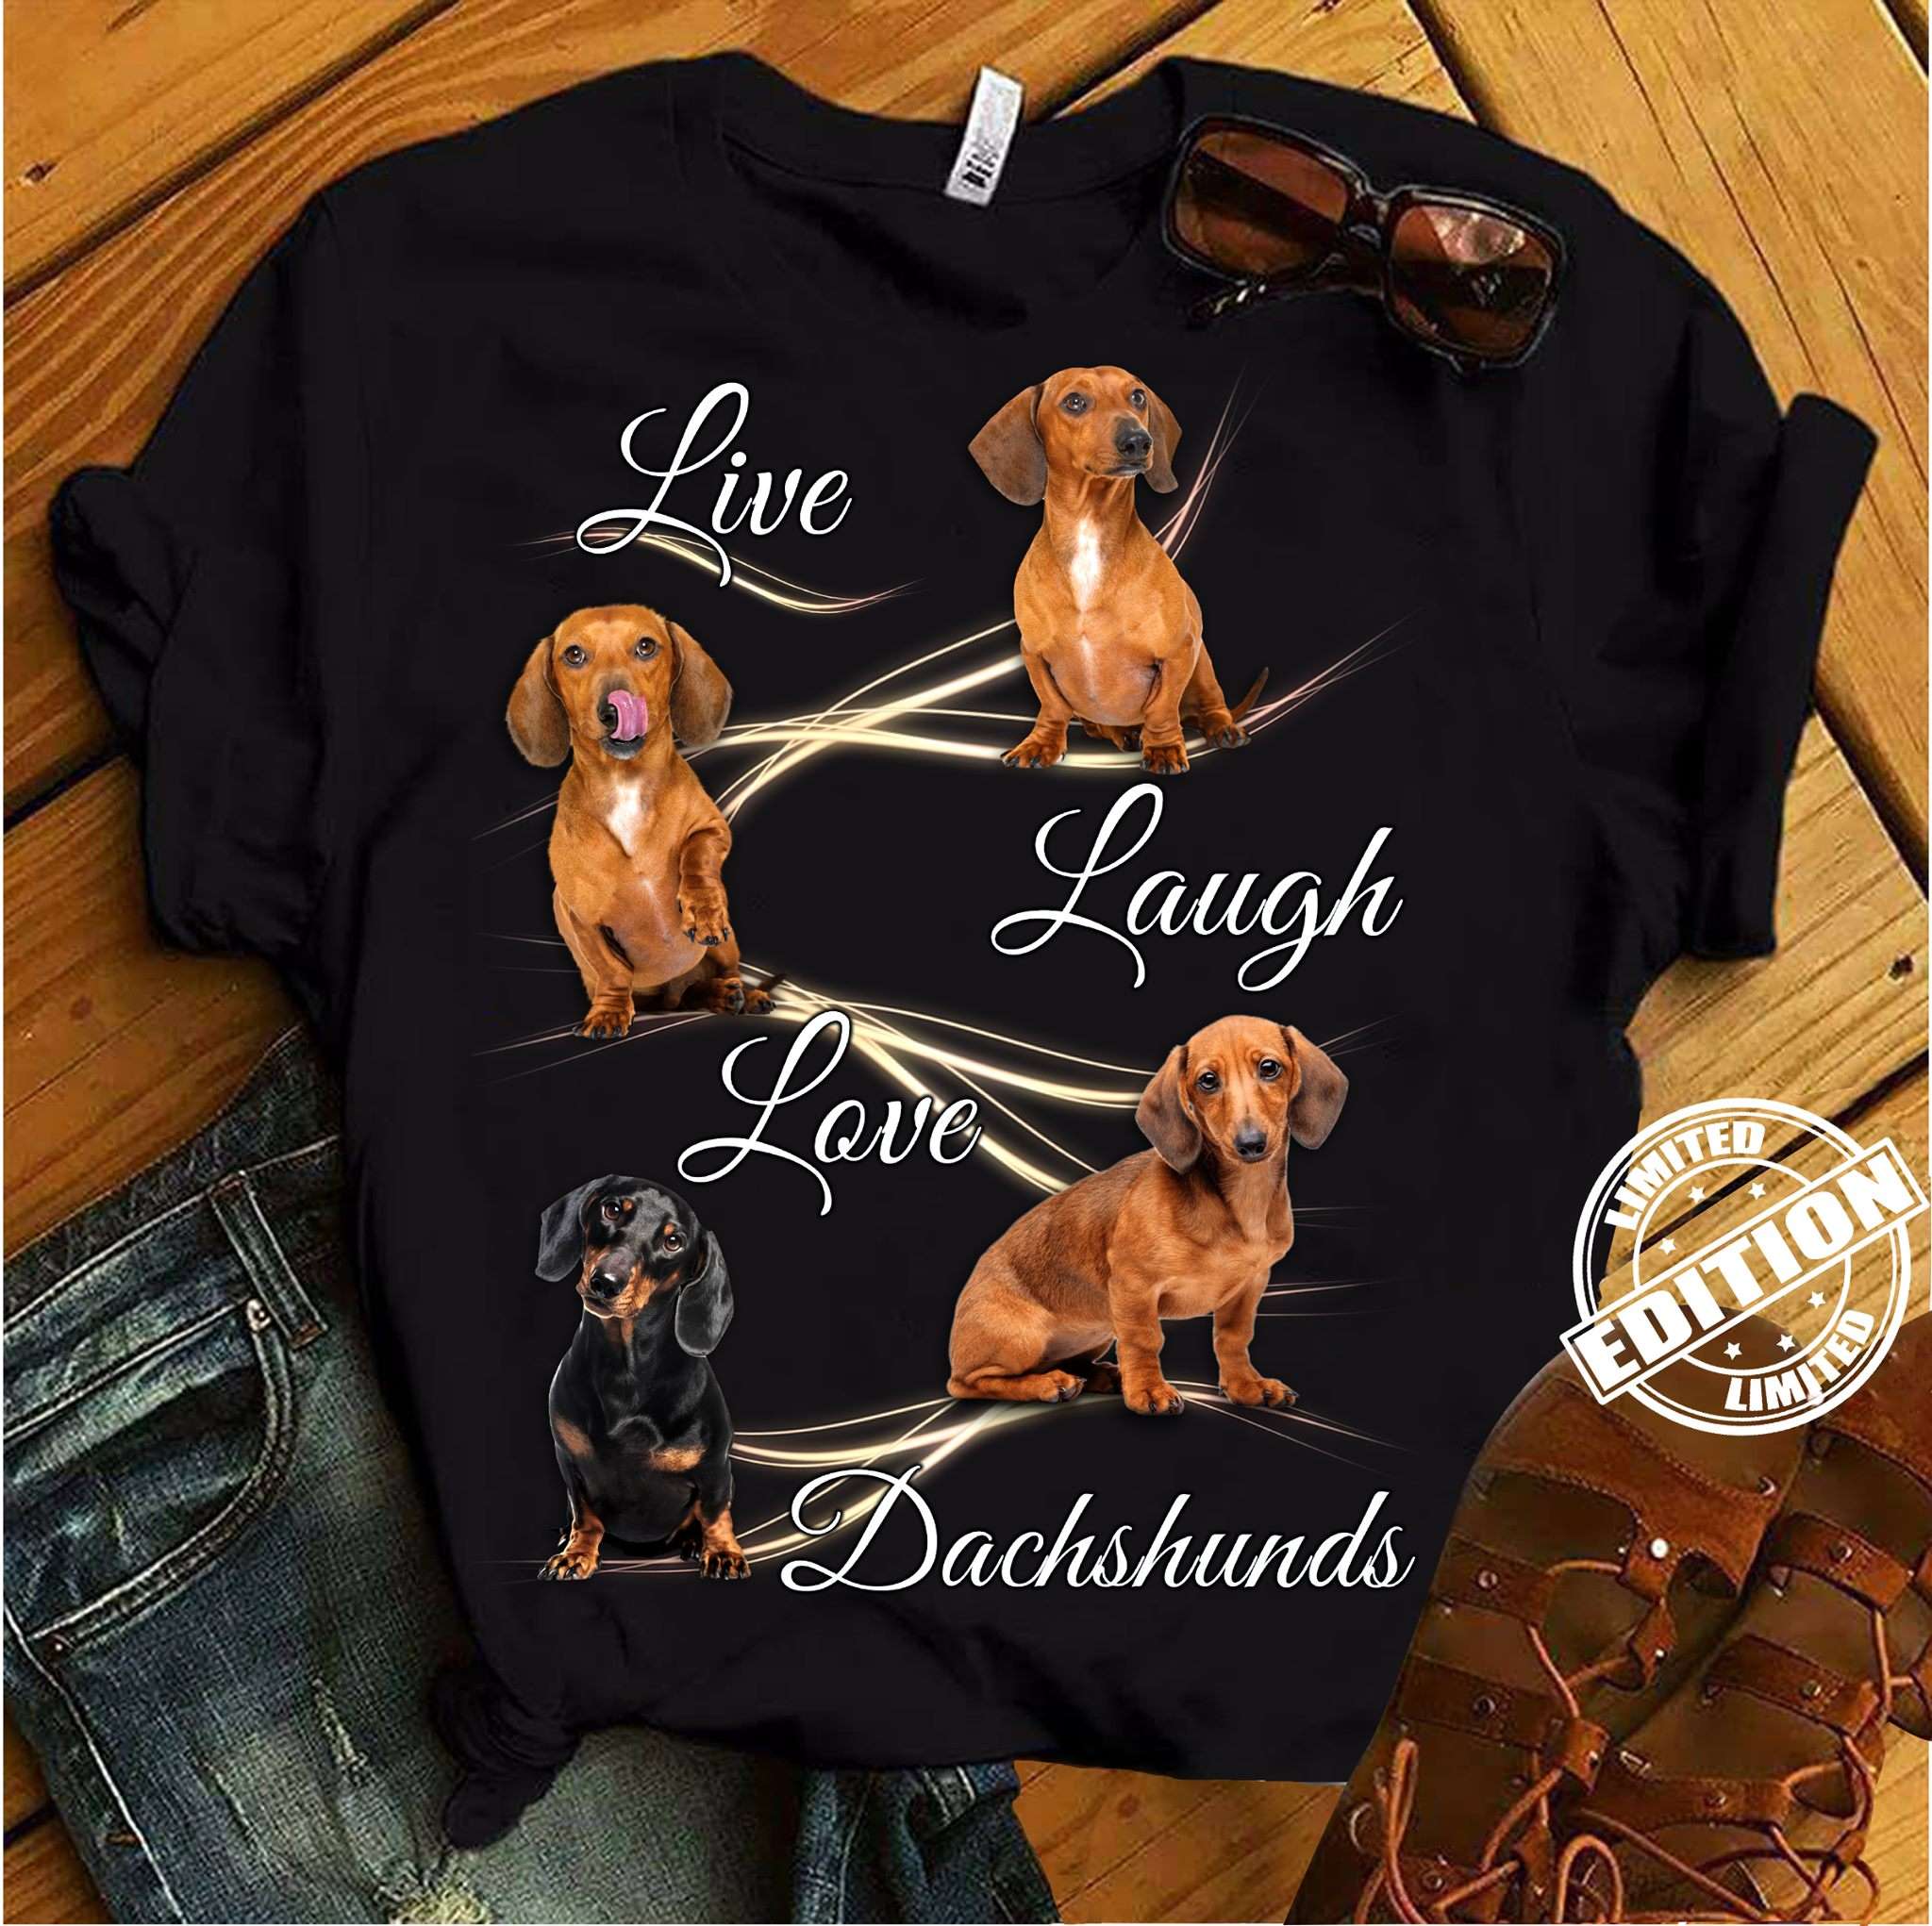 Dachshund Dog - Live laugh love dachshunds